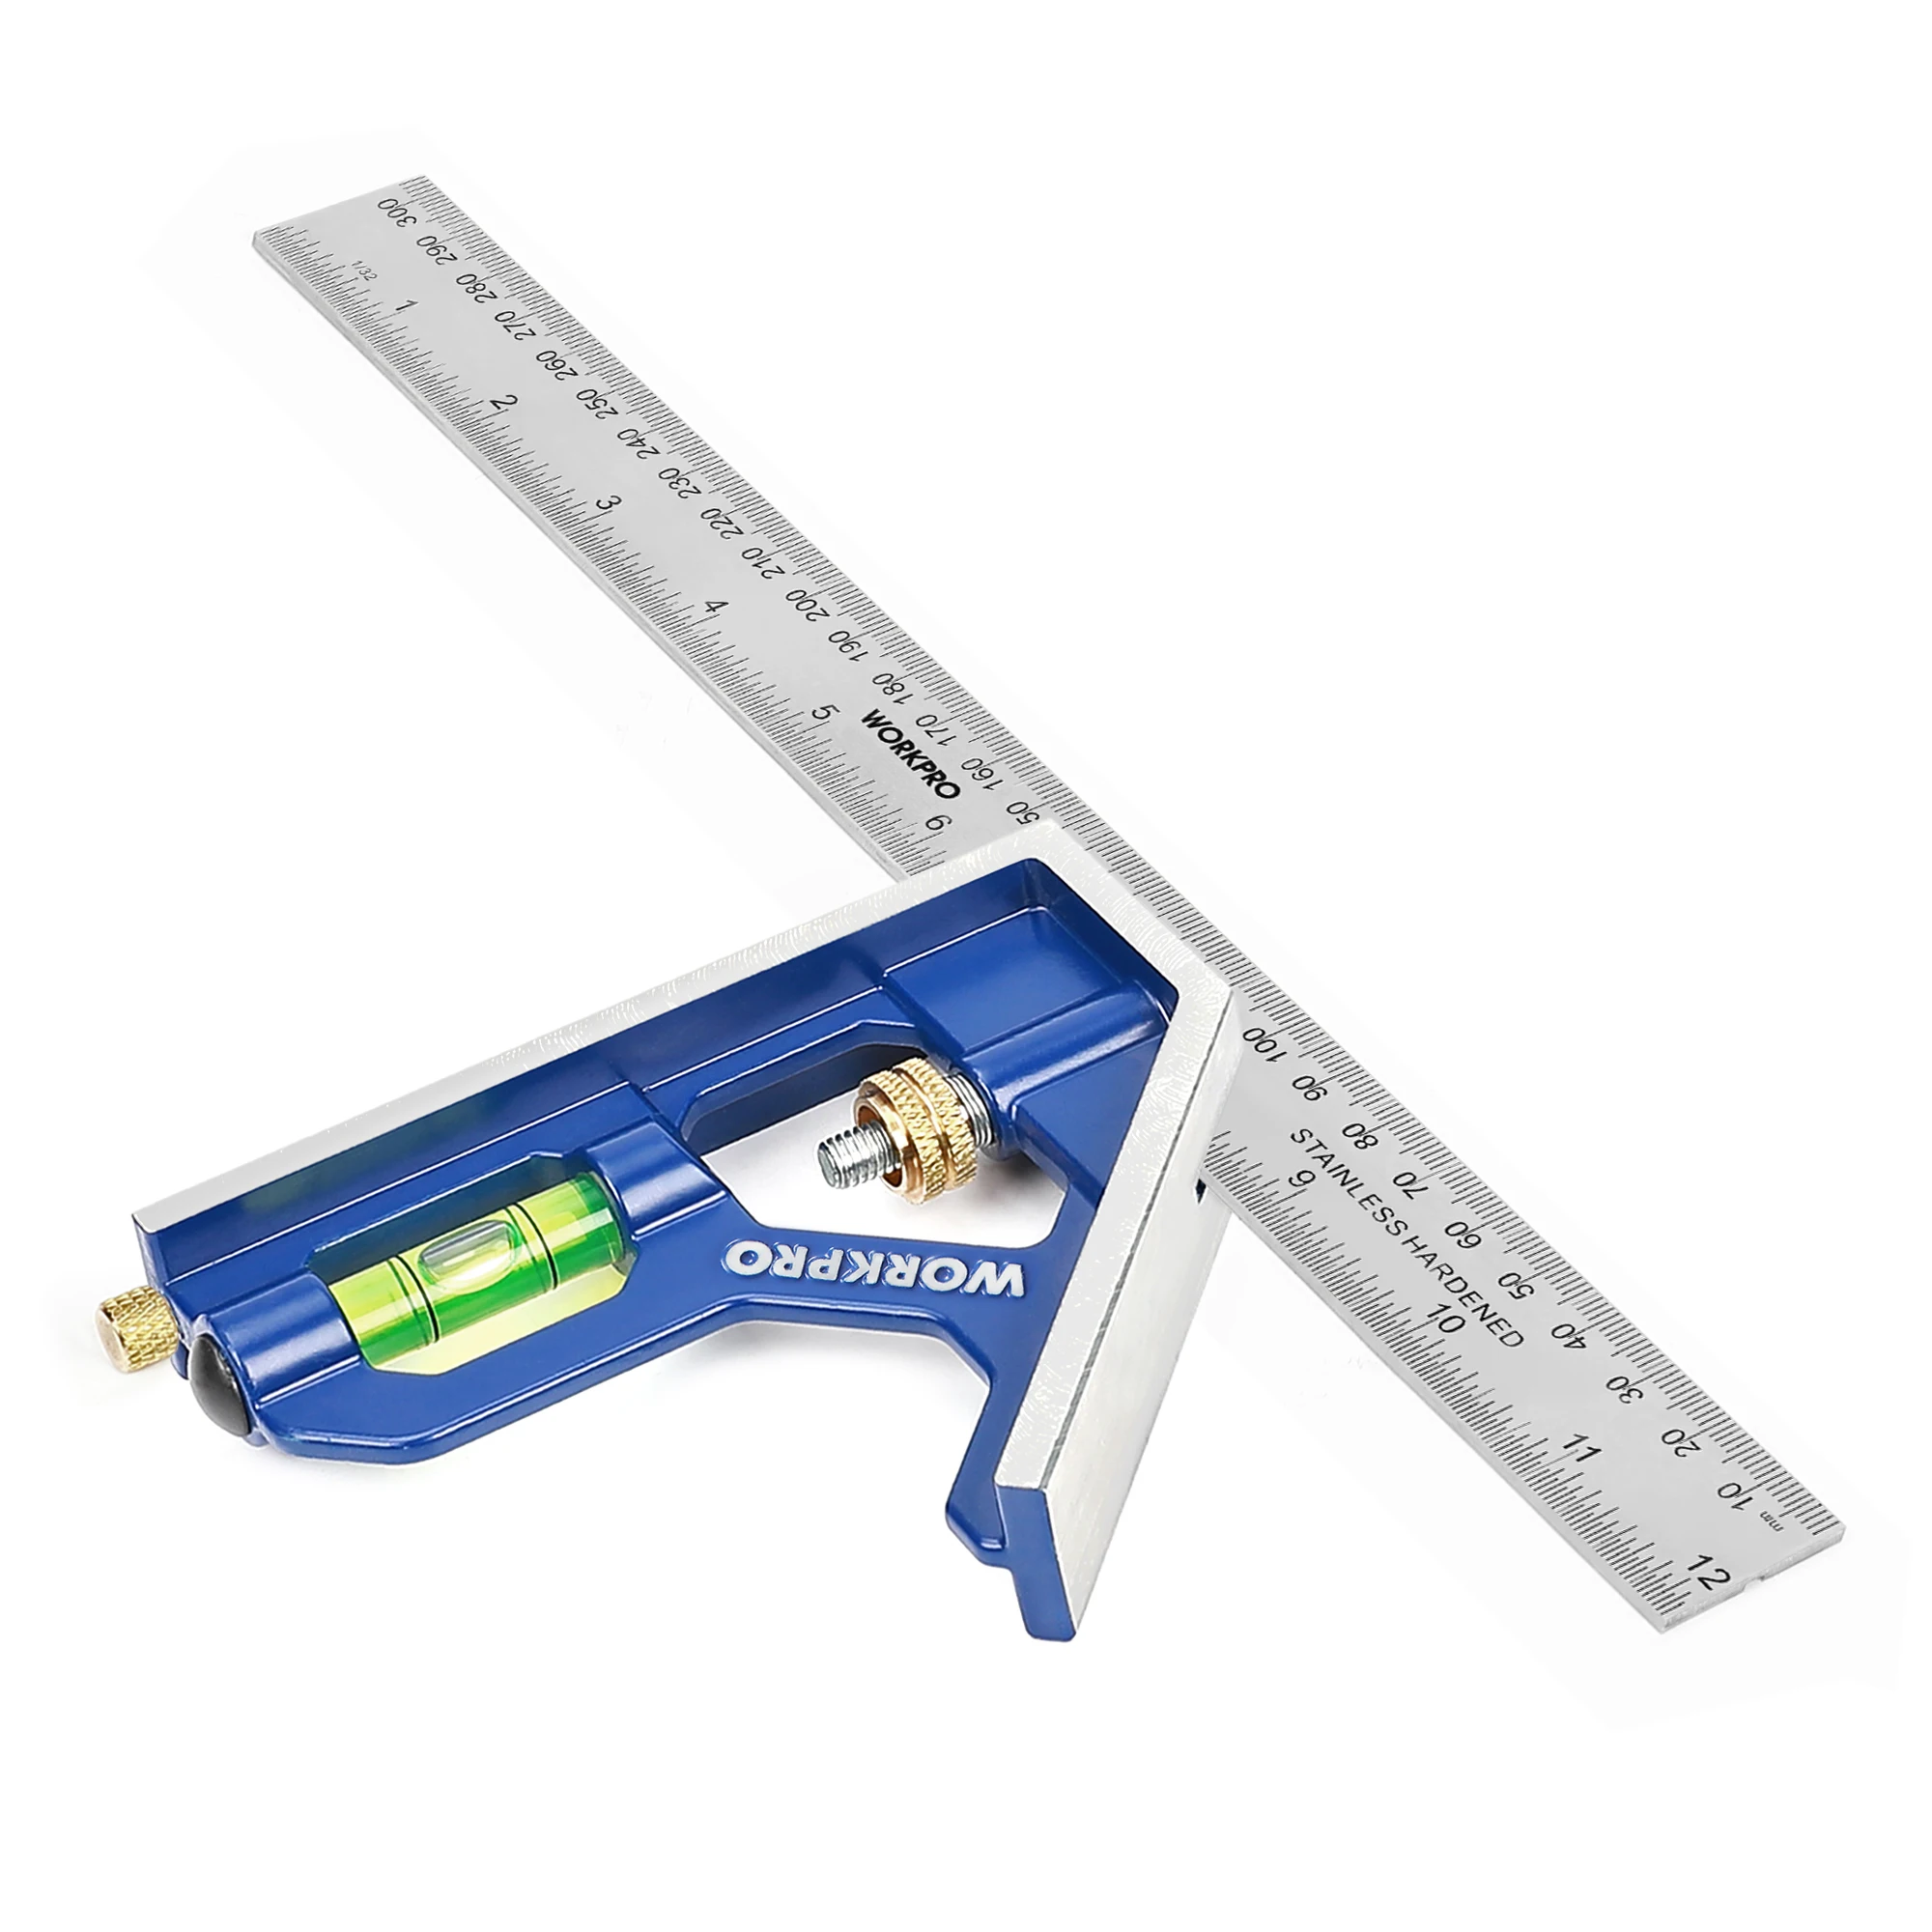 Giftprod 12 Adjustable Sliding Combination Square Ruler & Protractor Level Measure Measuring Set Inch/Metric 4R Combination Square 